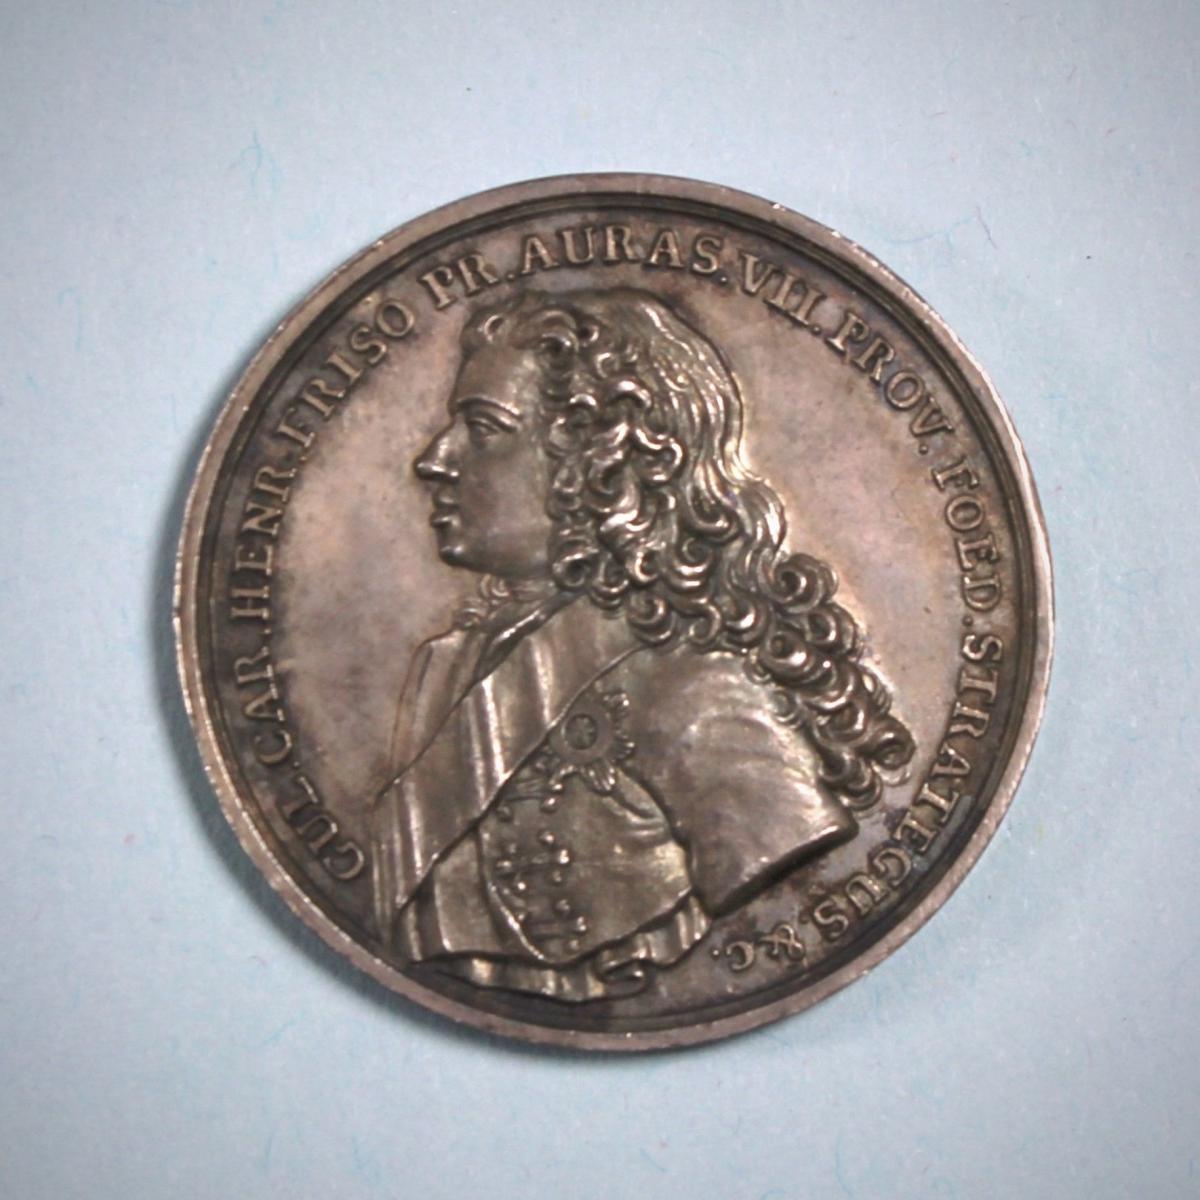 RARE GEORGE II Silver PRINCE of ORANGE & DUKE of CUMBERLAND Medal by T Pingo. London 1747